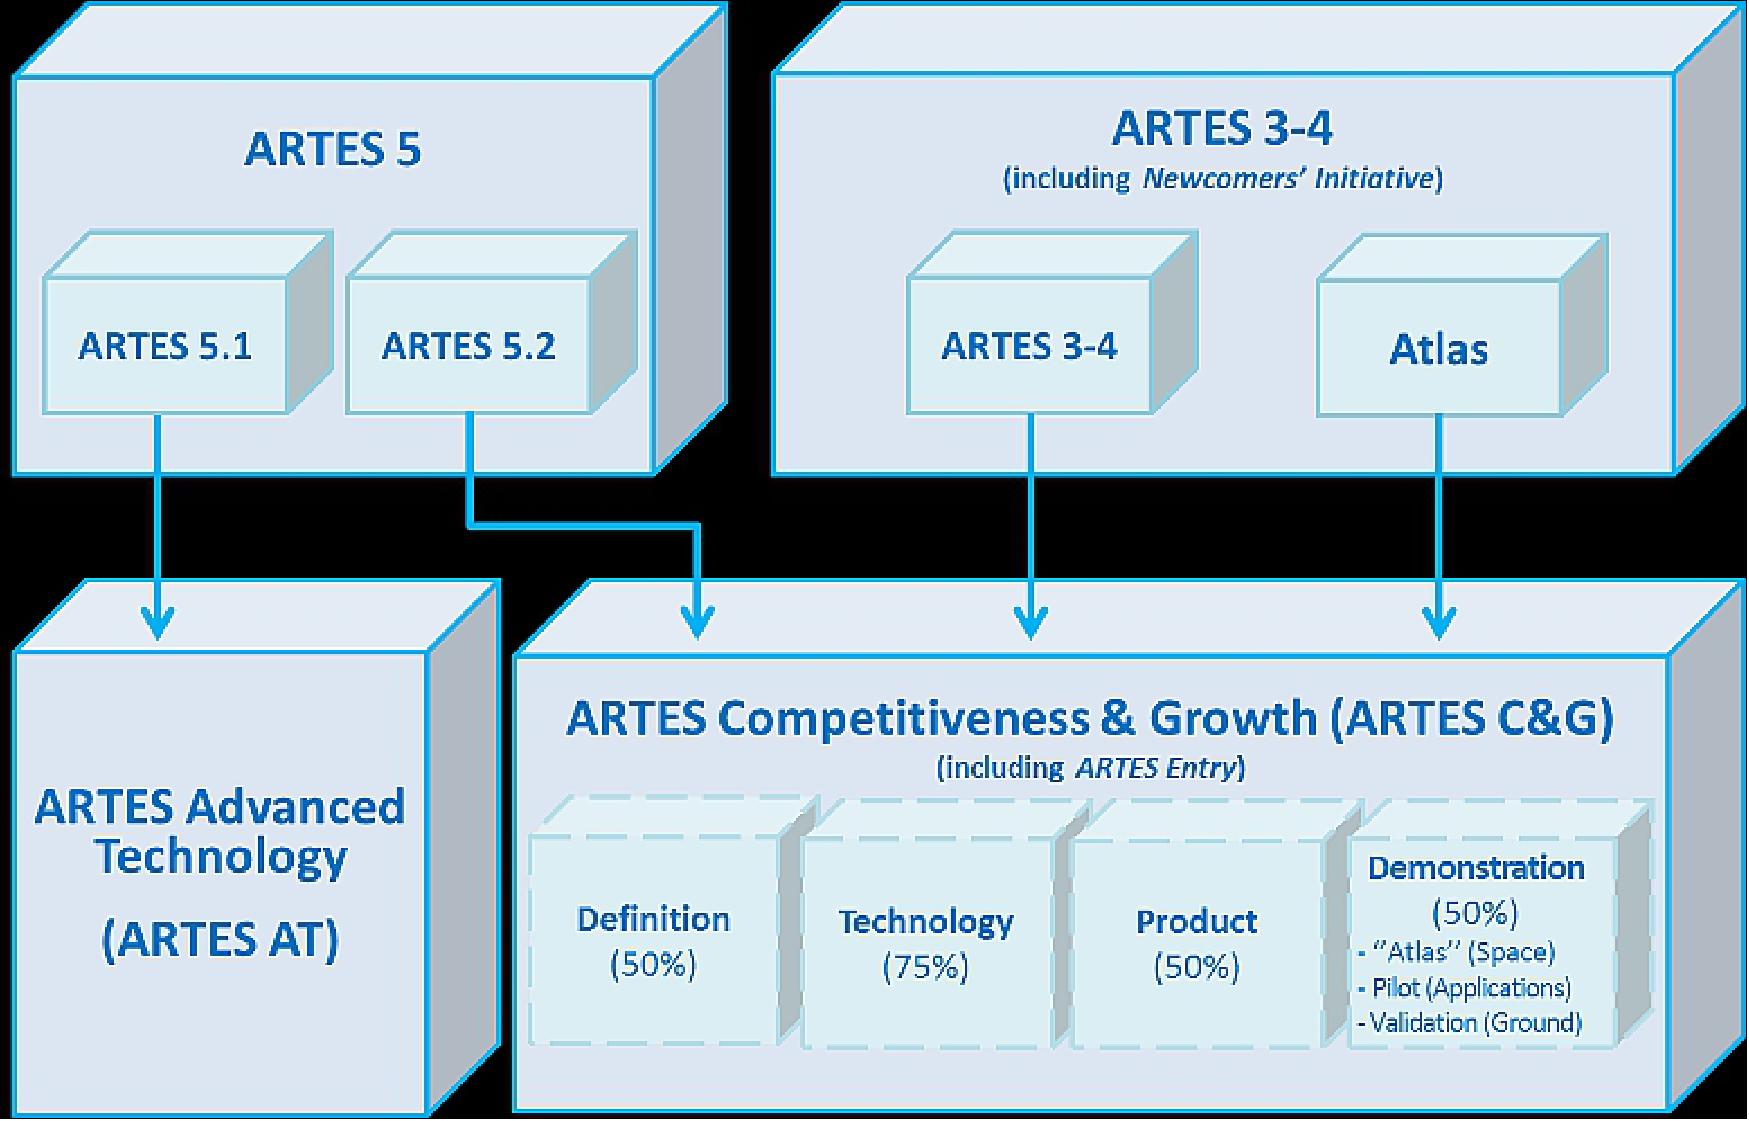 Figure 5: Evolution of ARTES 3-4 and 5 (image credit: ESA)